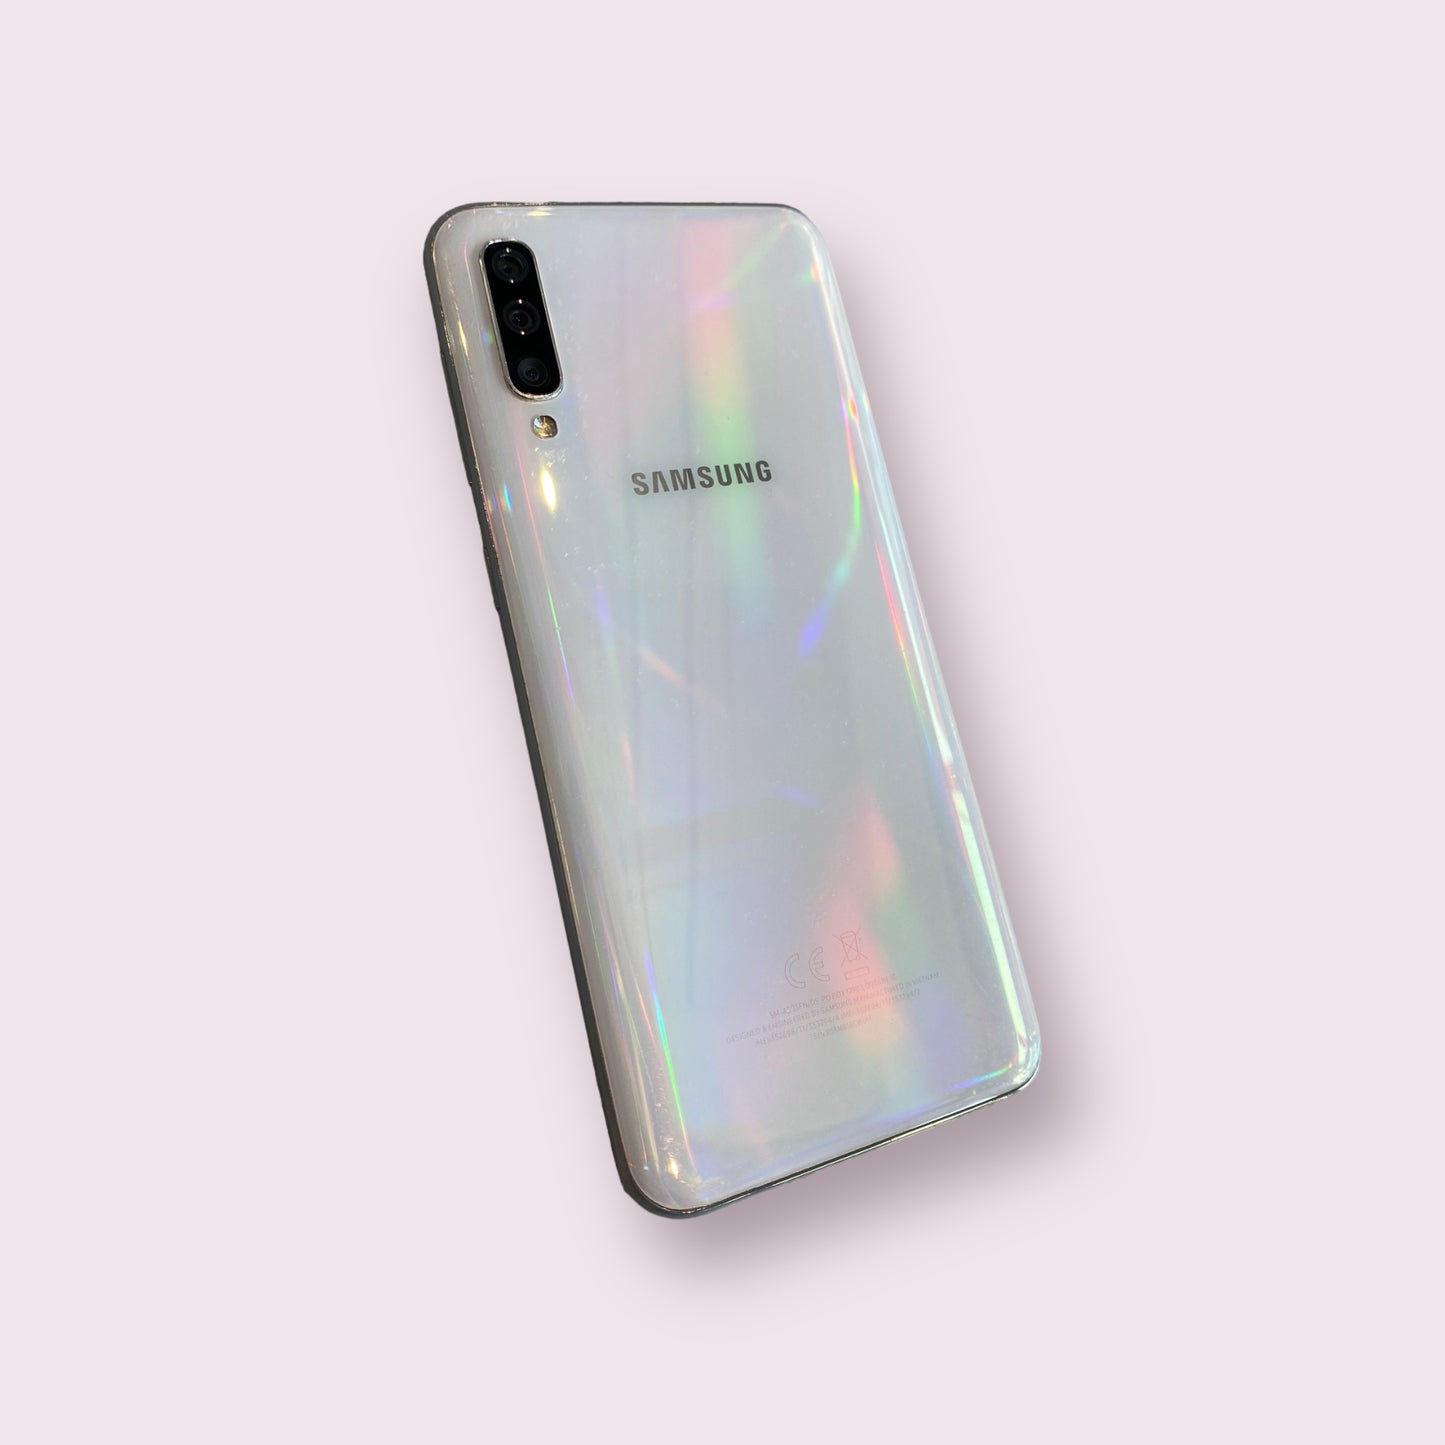 Samsung Galaxy A50 128gb White Dual Sim Android Smartphone - Unlocked - Grade B